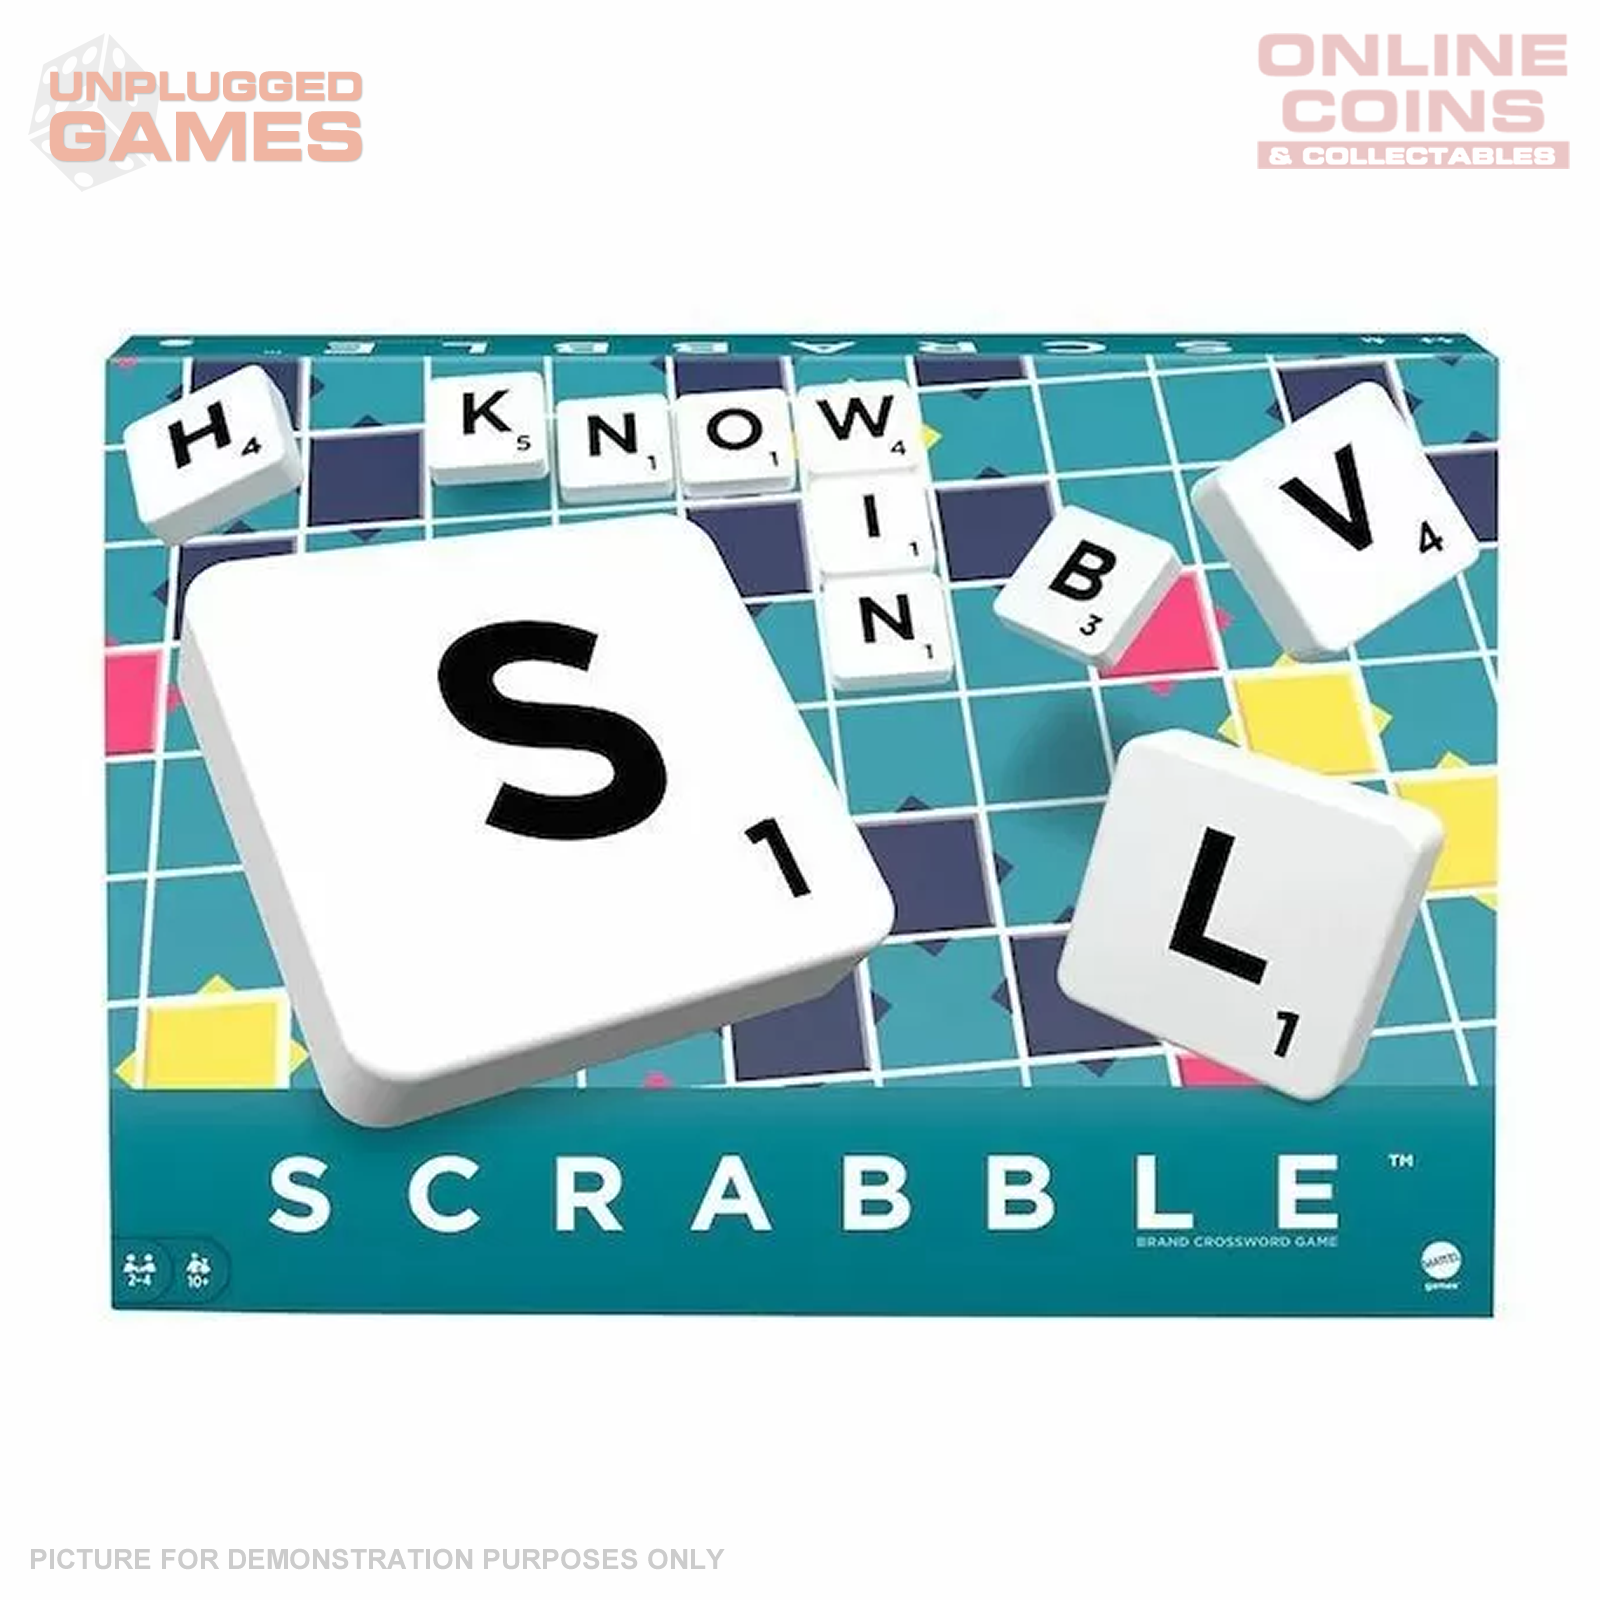 Scrabble - Original Edition